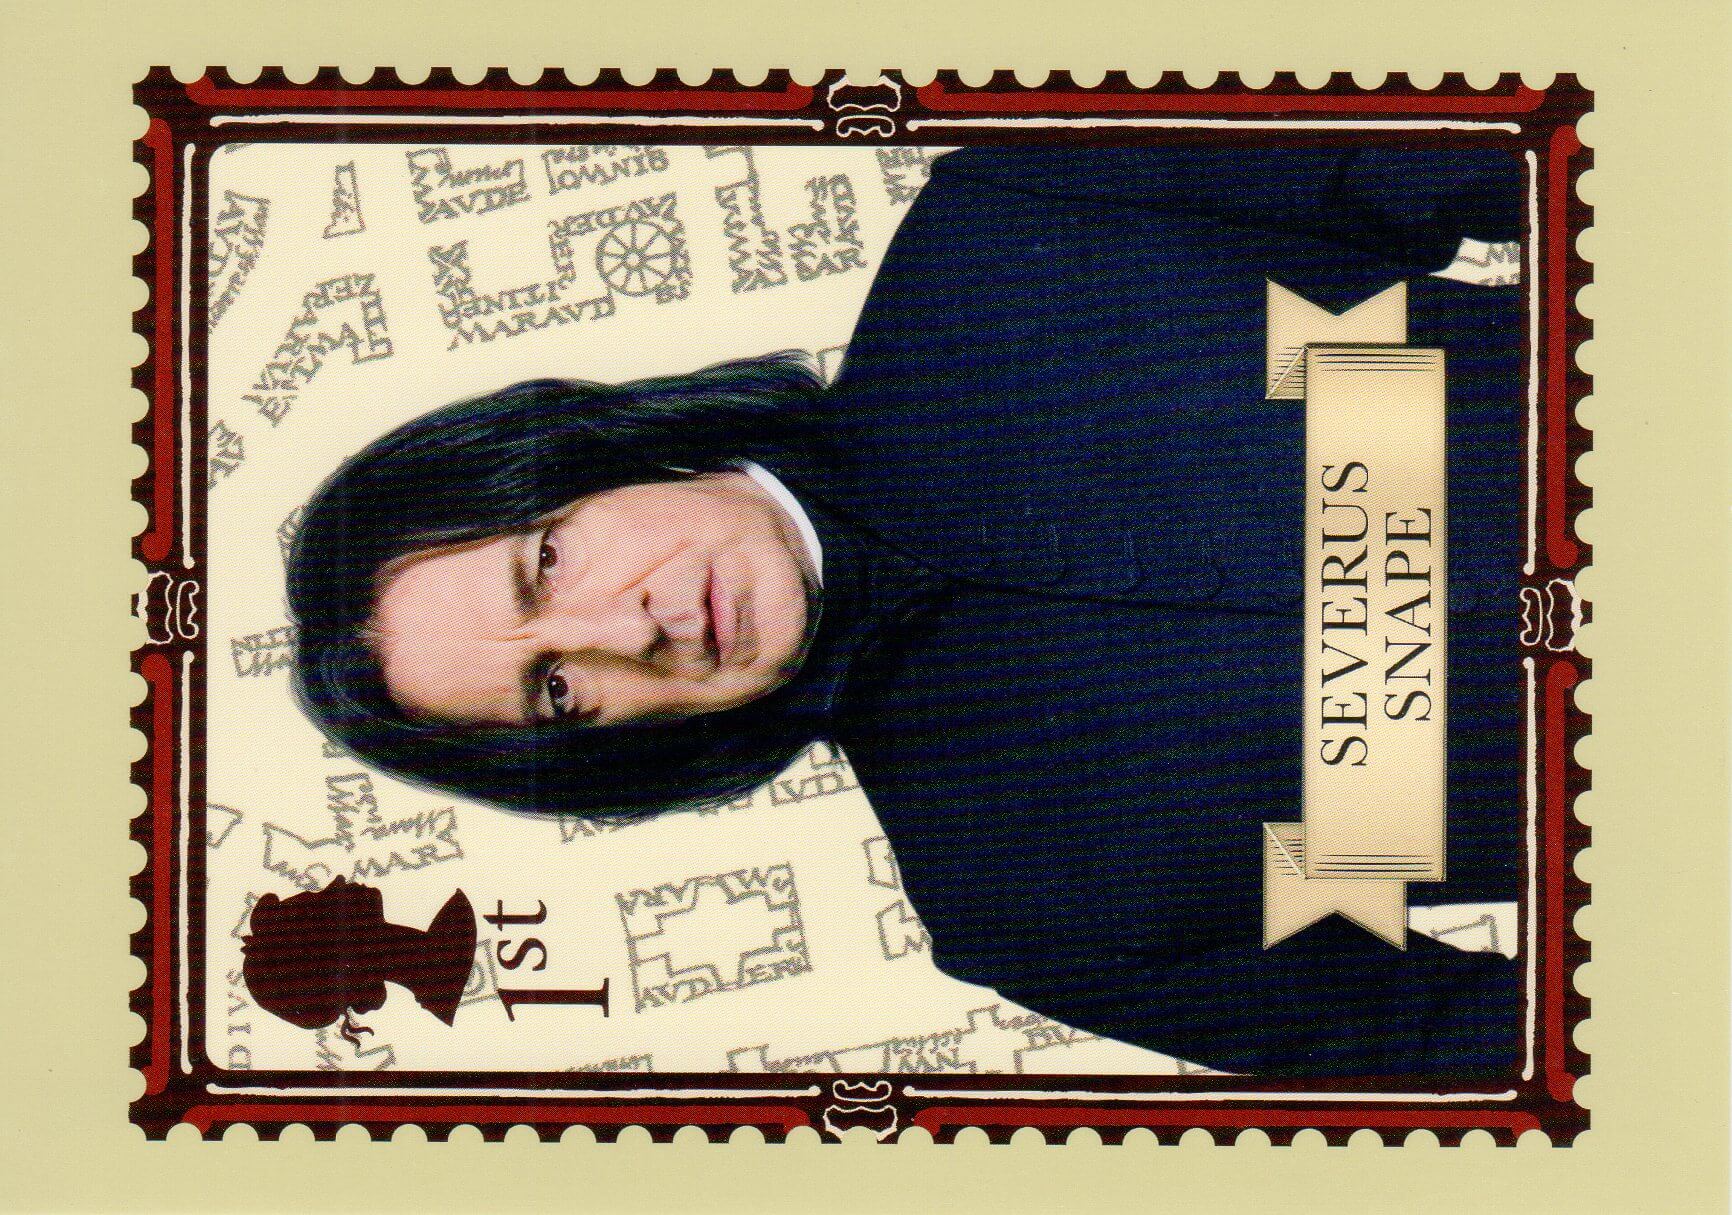  Harry Potter Set of 10 Royal Mail Postage Stamps 2018